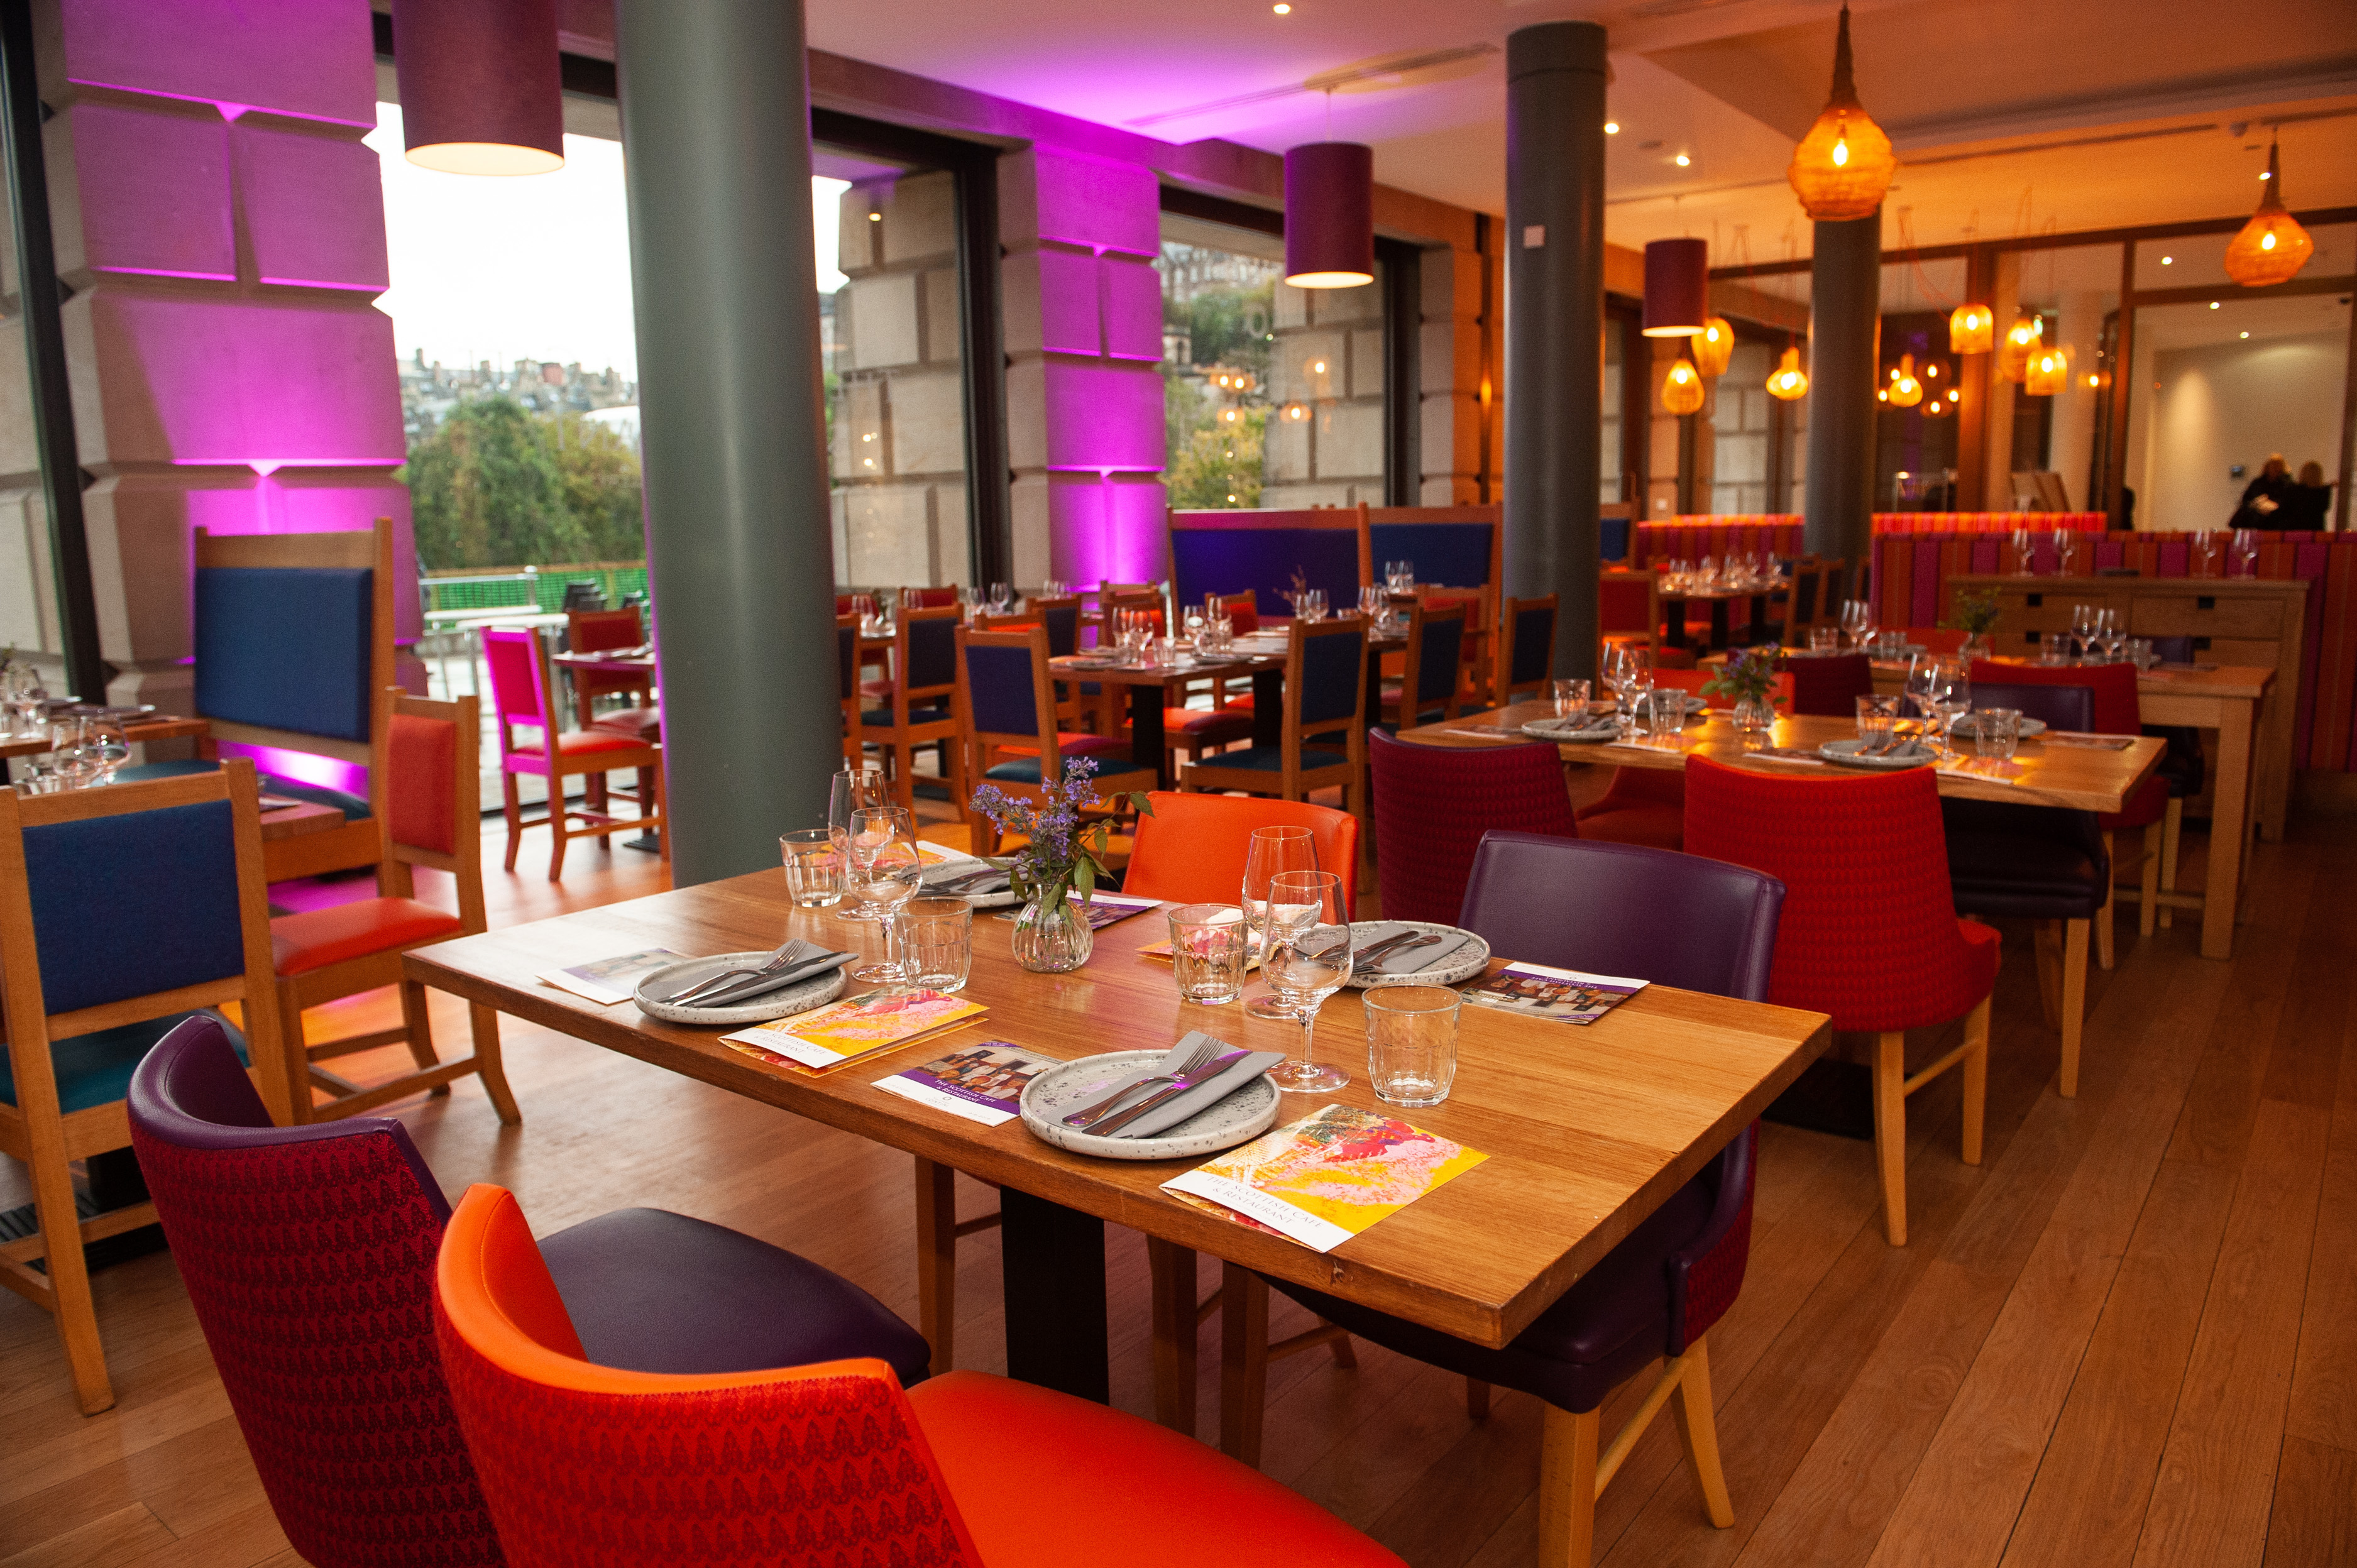 Hire The Scottish Cafe & Restaurant | The Scottish Cafe & Restaurant